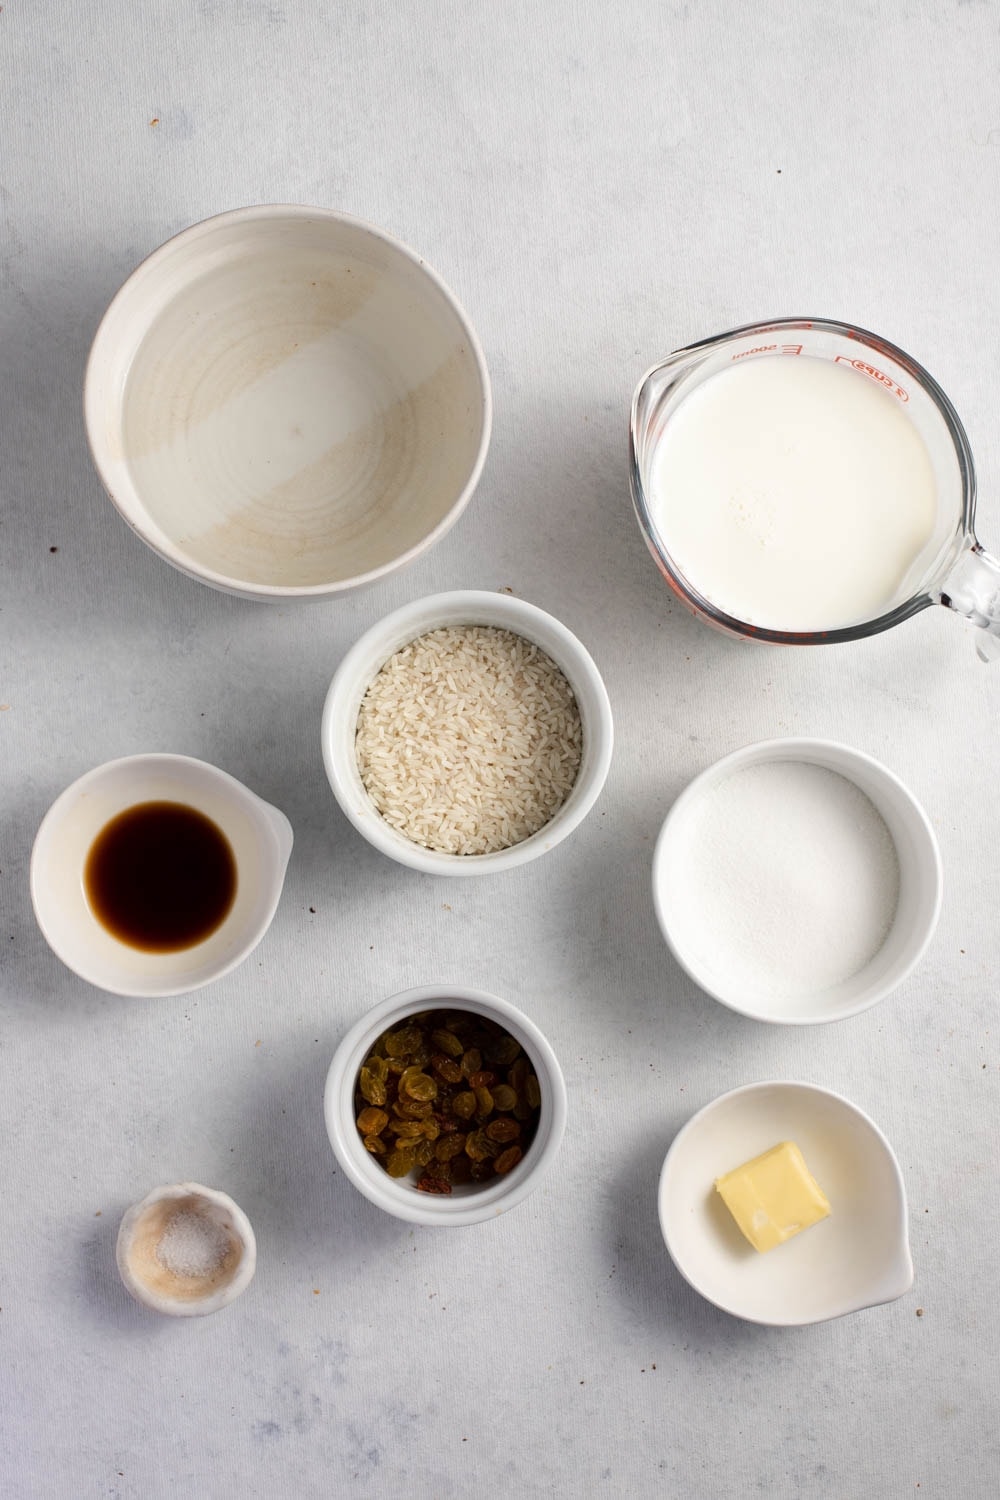 Creamy Rice Pudding Ingredients - Water, Rice, Milk, Sugar, Salt, Egg, Raisins, Butter and Vanilla Extract